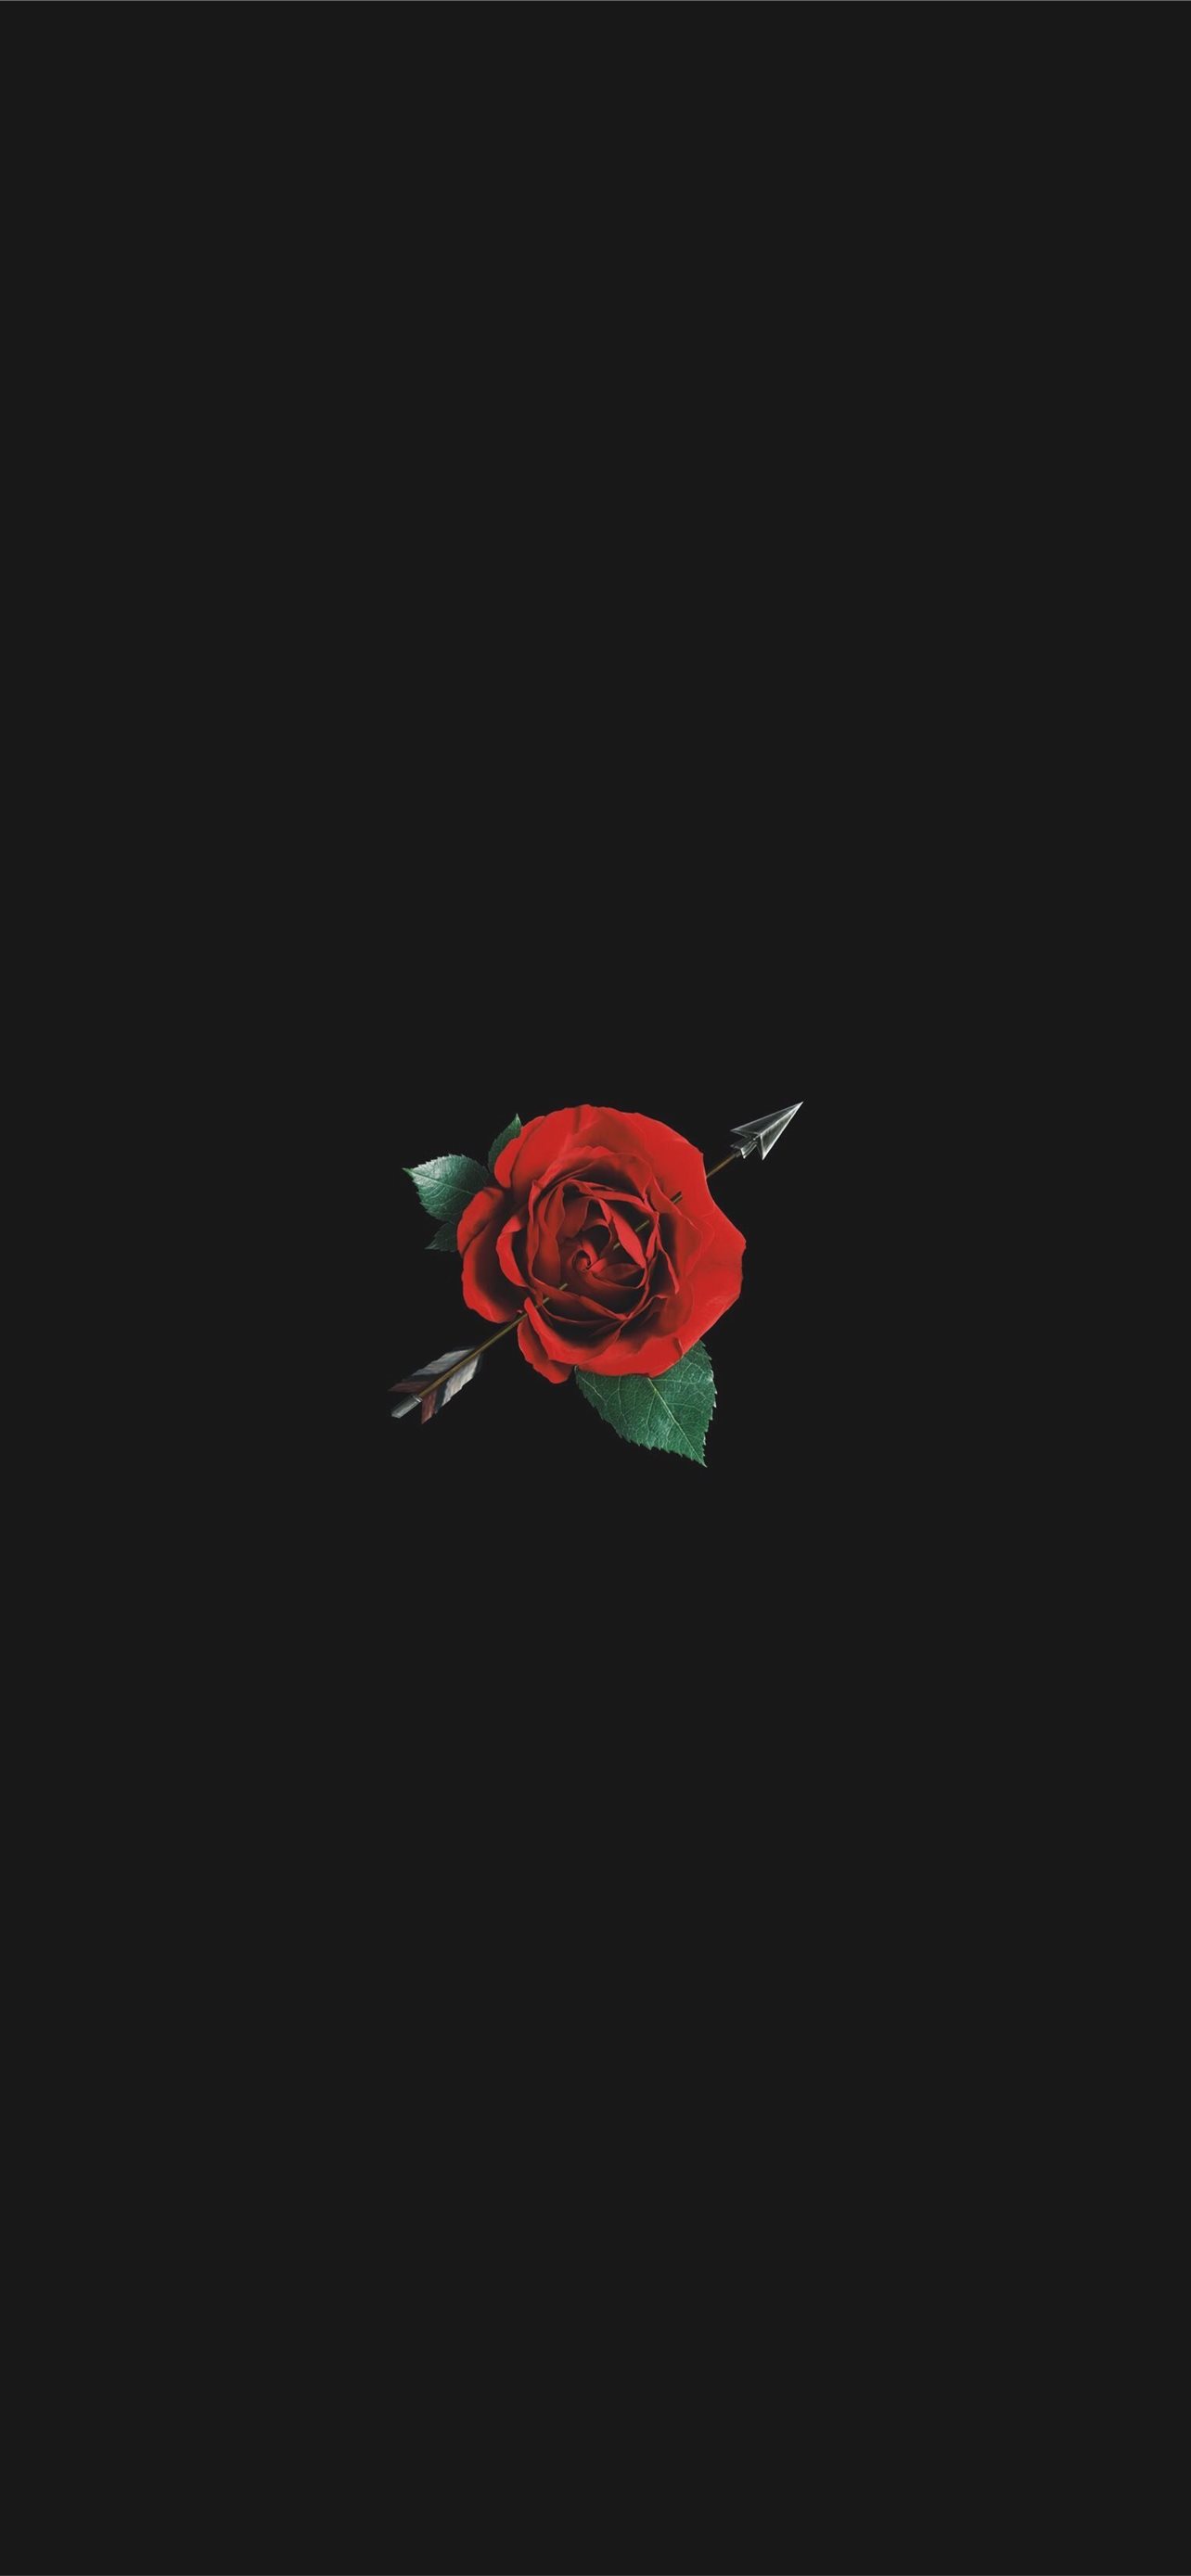 1920x1080 Wallpaper roses, drops, buds, dark background | Dark background  wallpaper, Rose wallpaper, Dark backgrounds